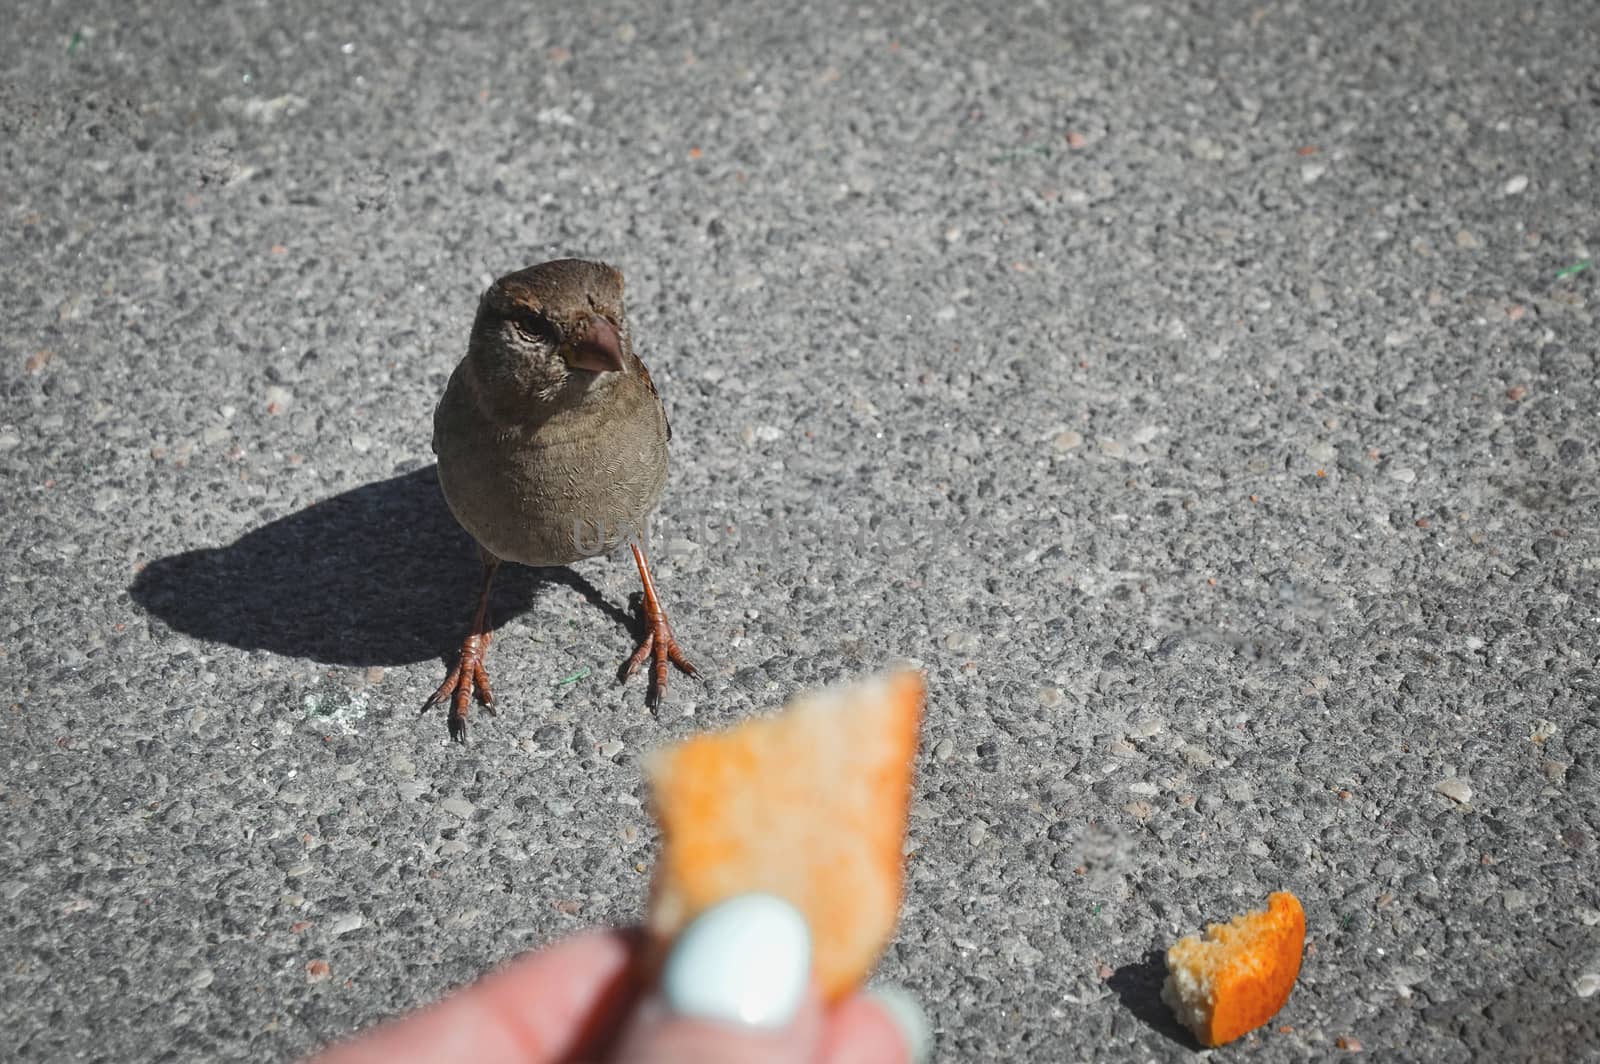 Feeding sparrow. A bright sparrow pecks bread crumbs. Female hand holding a cracker.